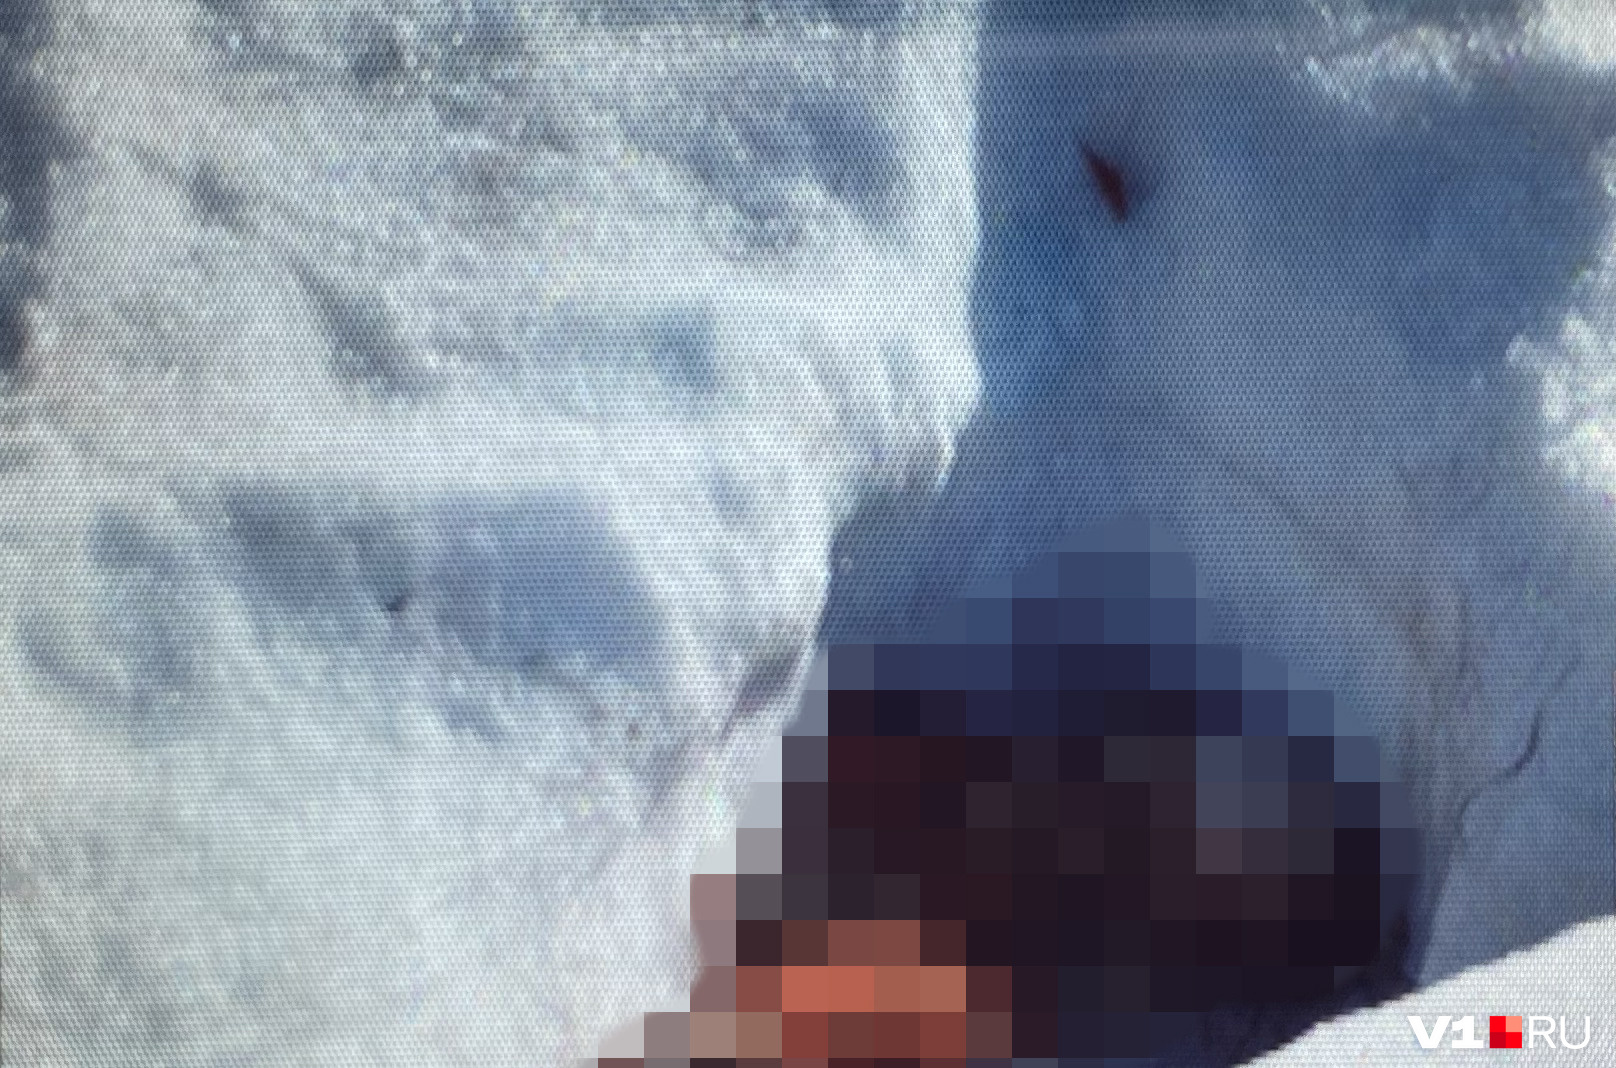 Тело нашли под слоем снега